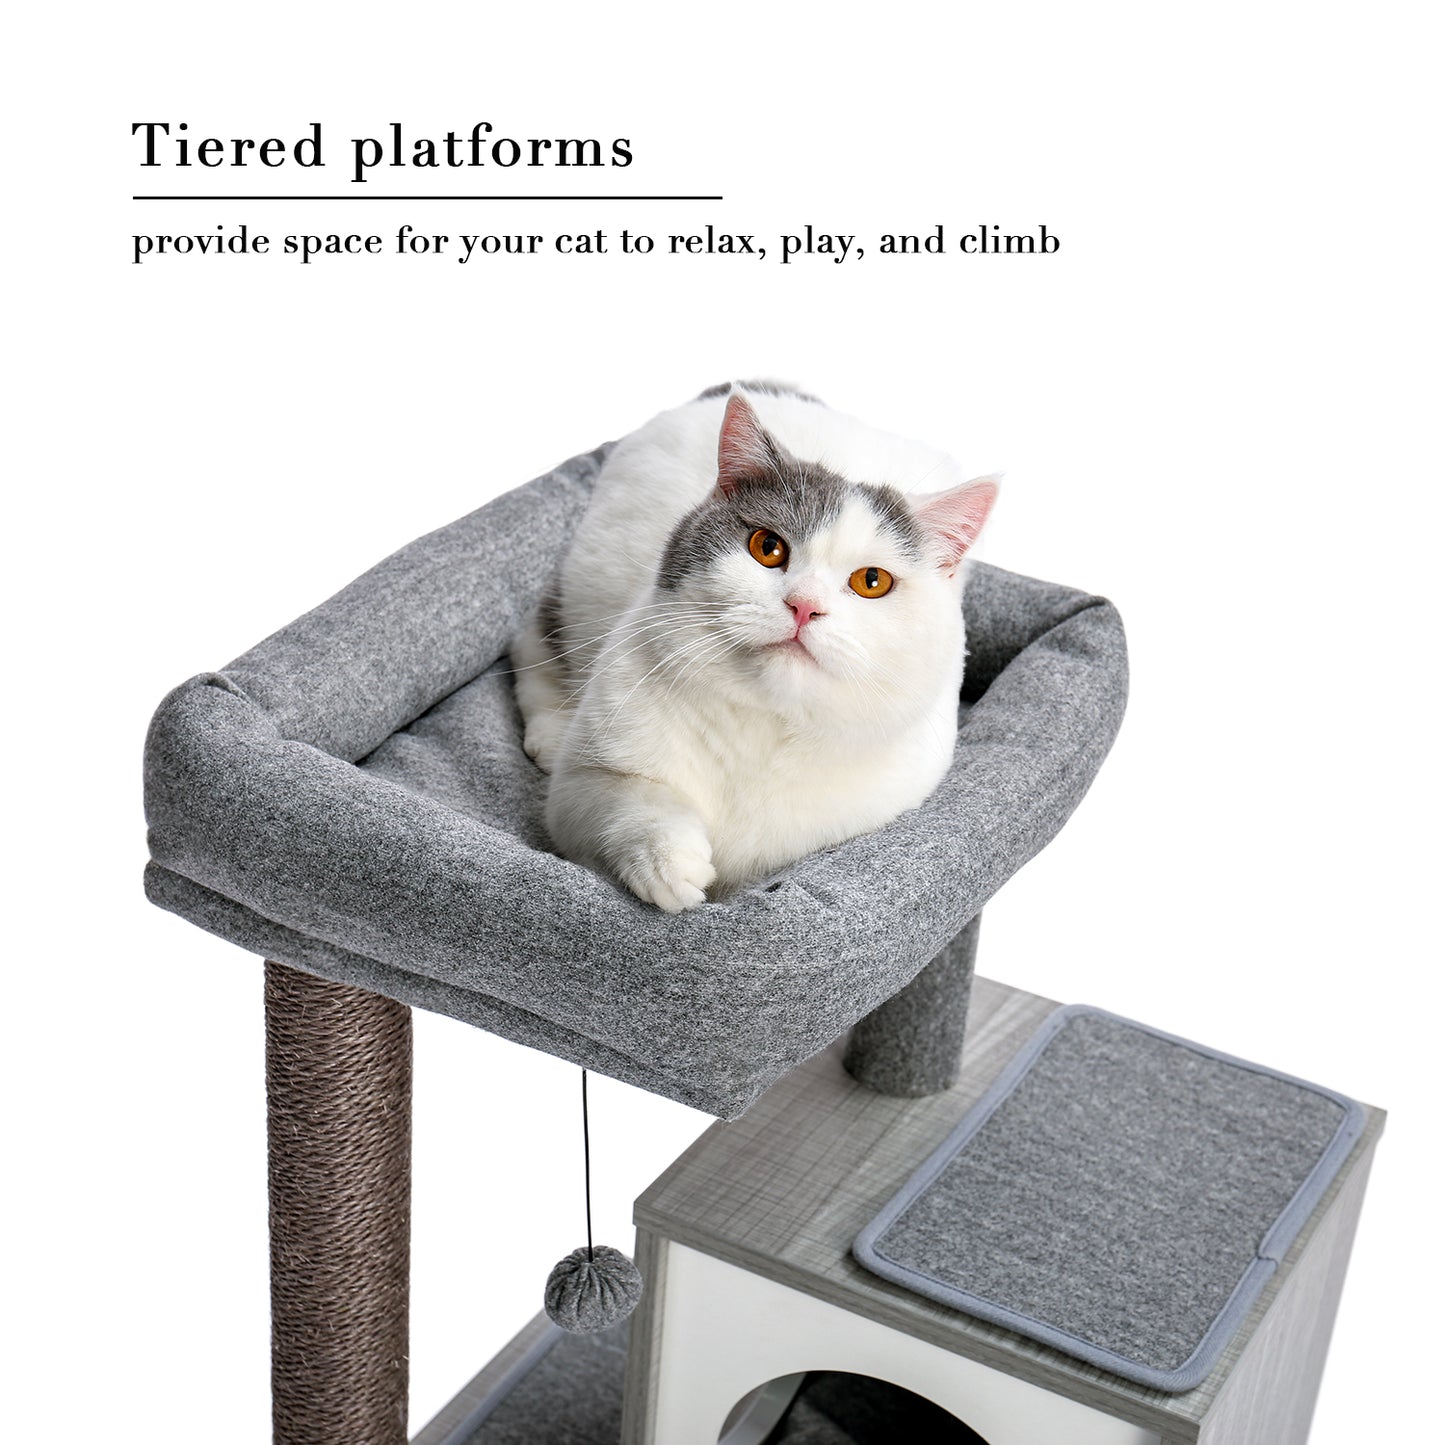 PAWZ Road 89cm Multi-Level Cat Tree Wooden Furniture Cat Home Grey